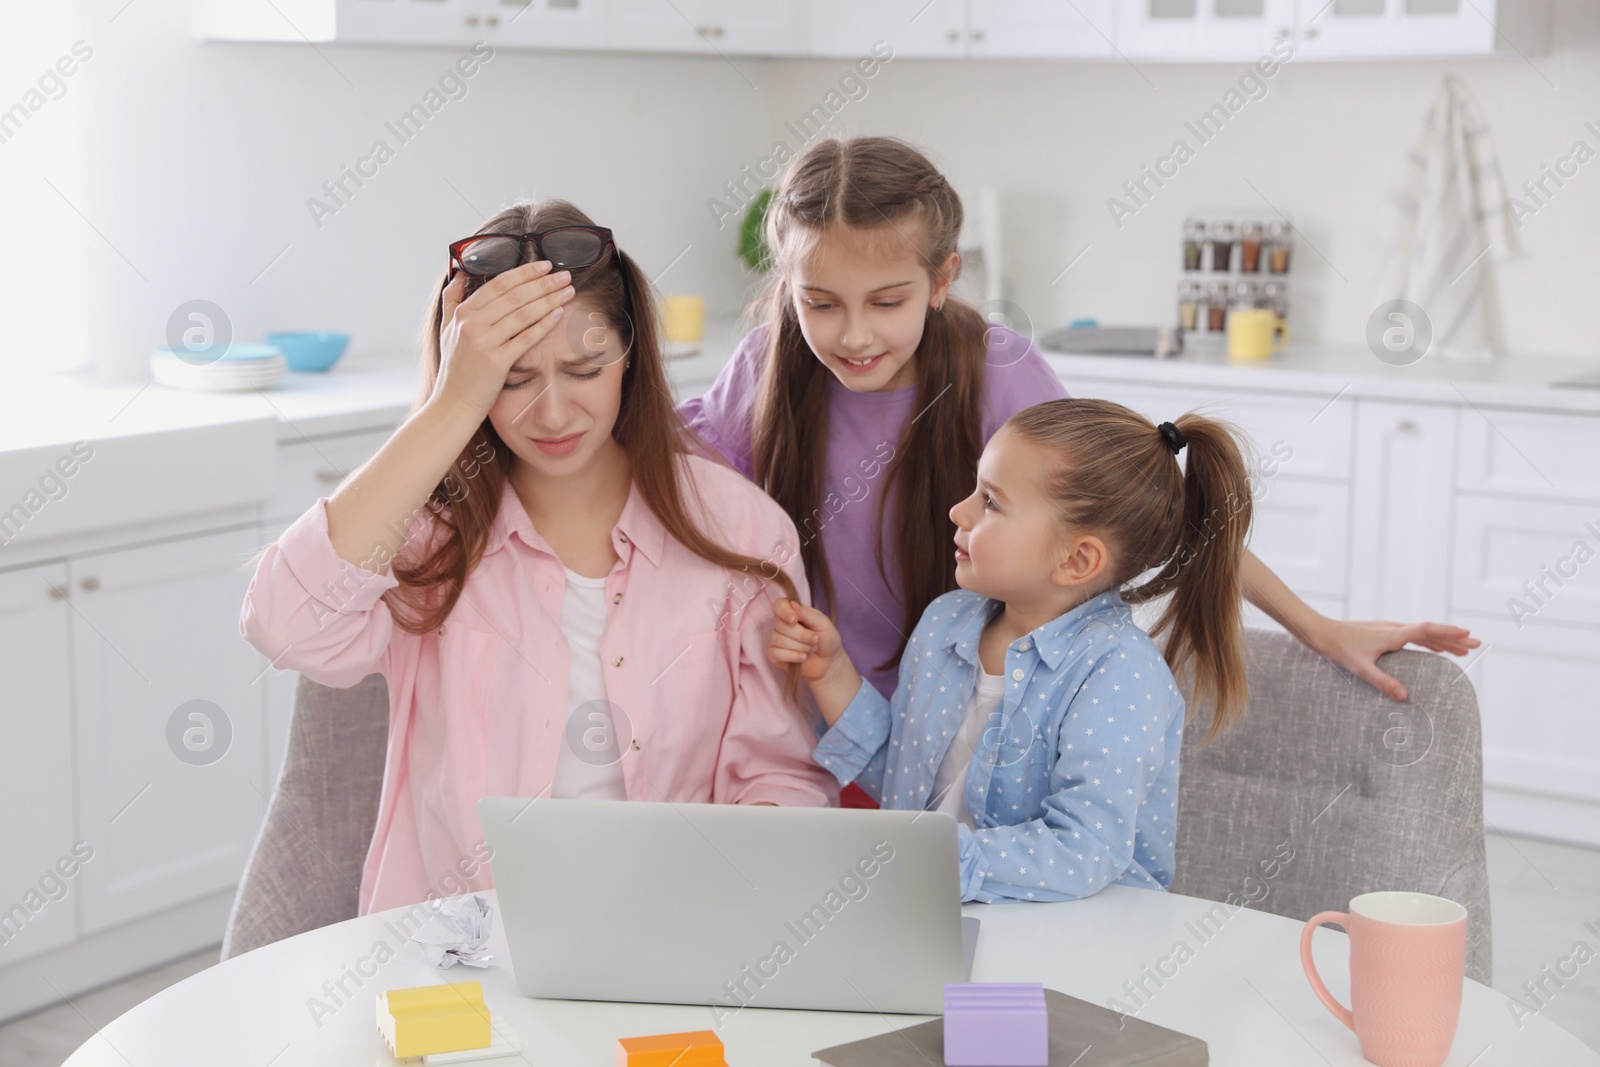 Photo of Children disturbing stressed woman in kitchen. Working from home during quarantine